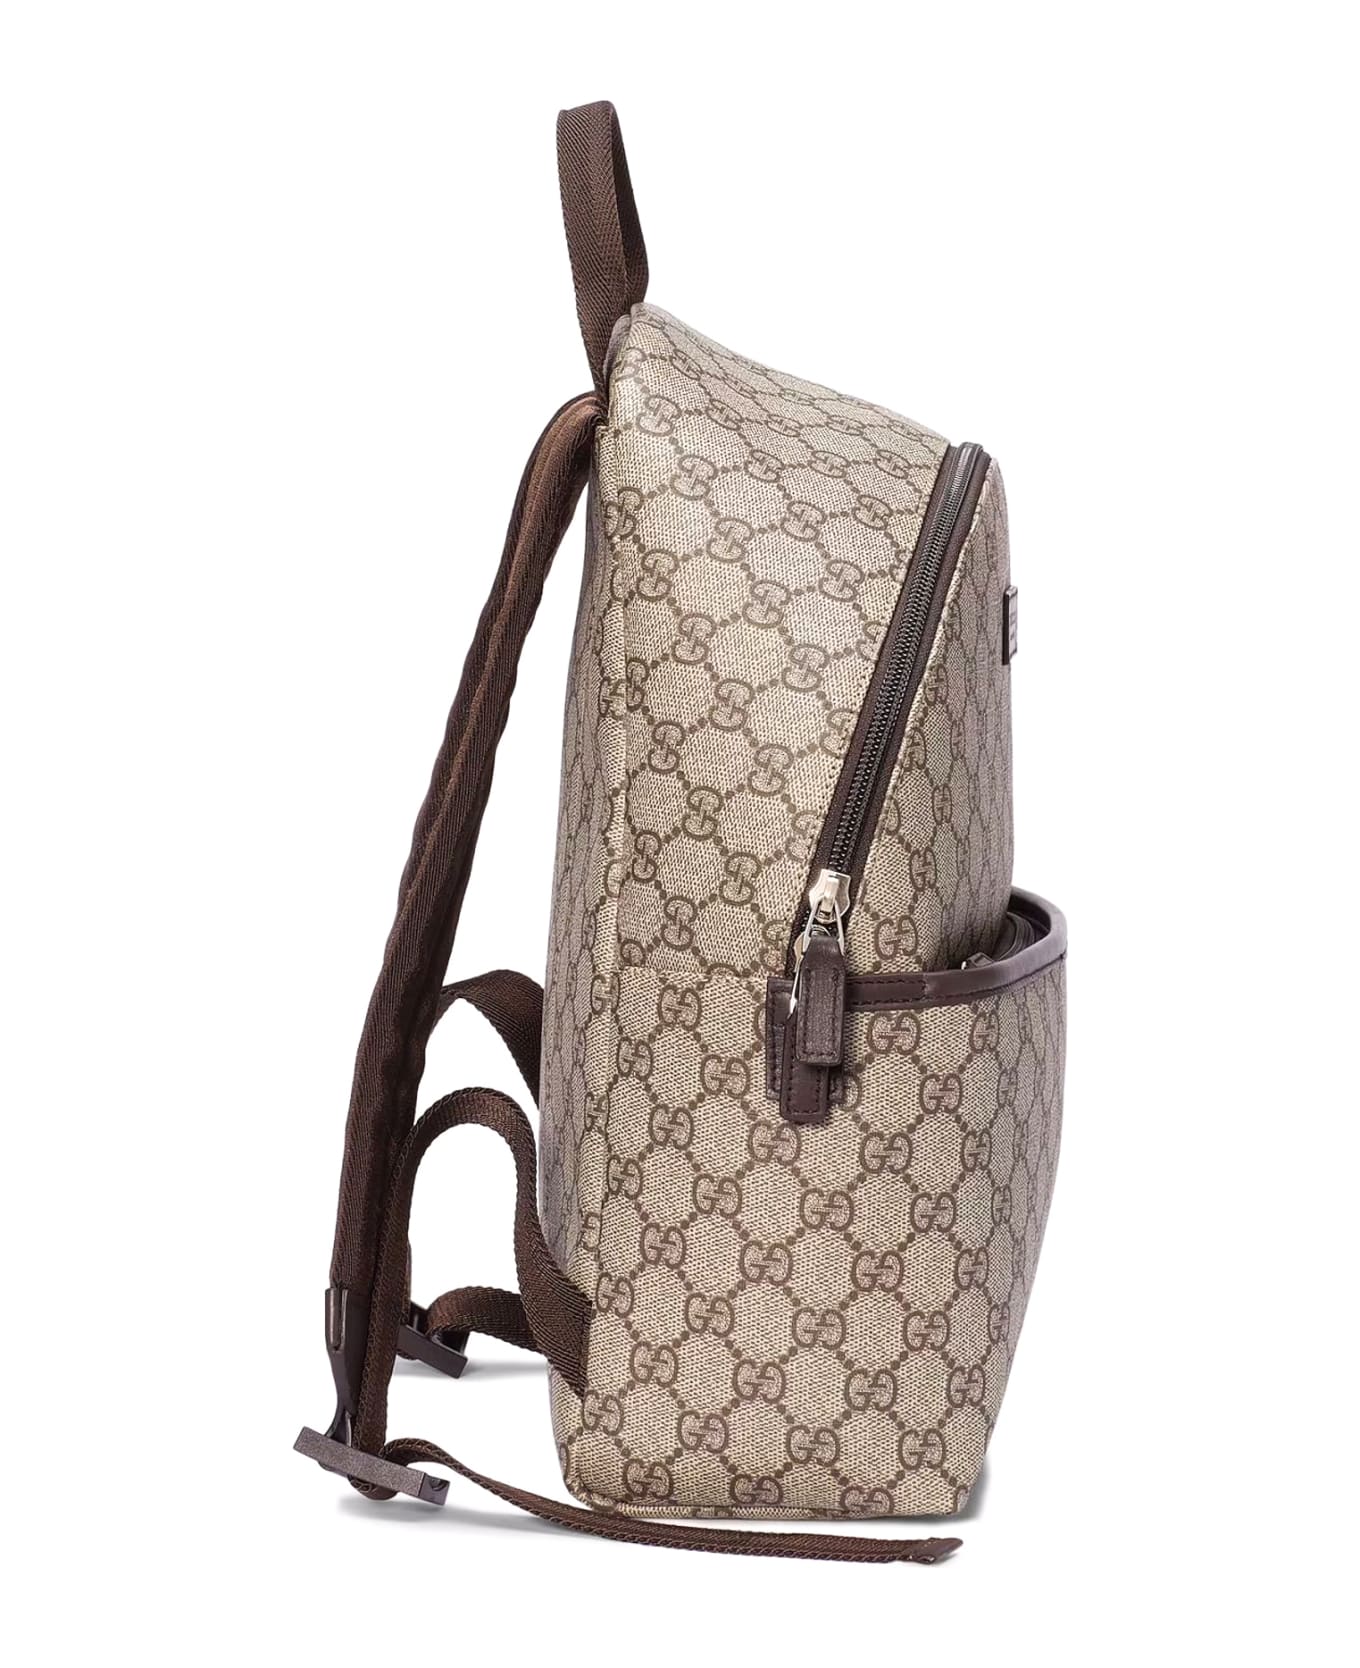 Gucci Supreme Canvas Backpack - BEIGE